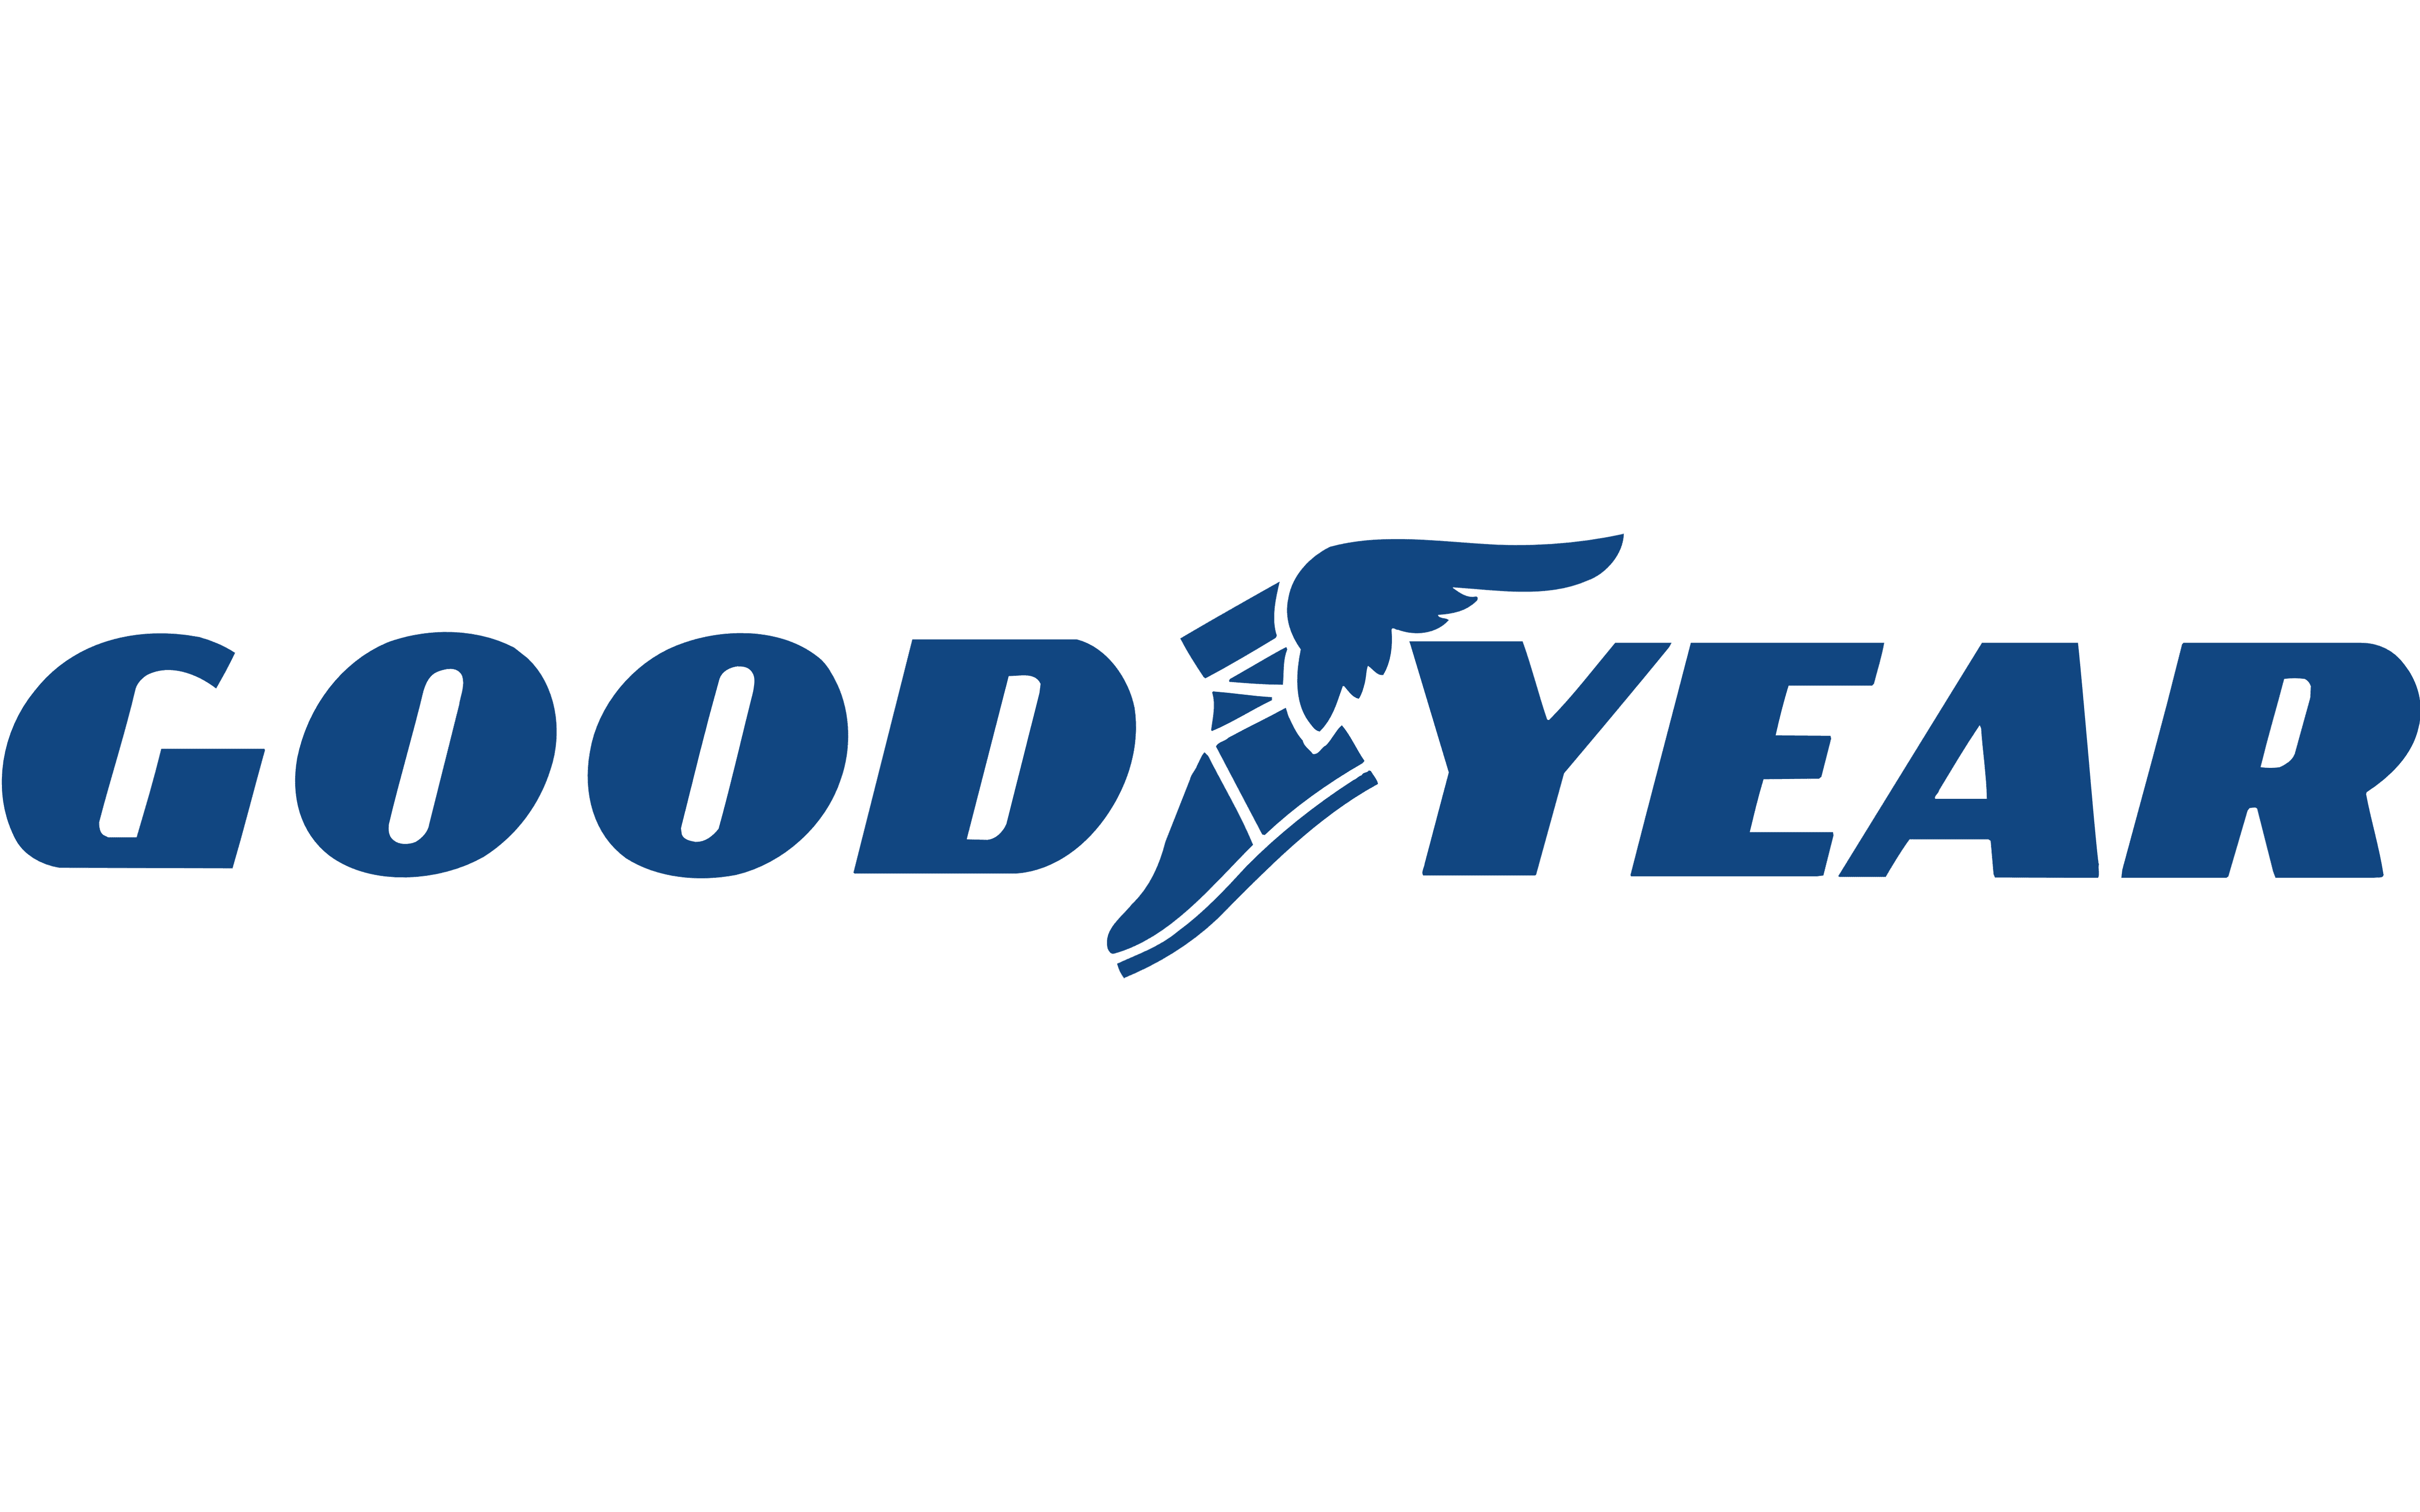 Goodyear | Adopt1Alternant - Offres d'emploi en stage et alternance